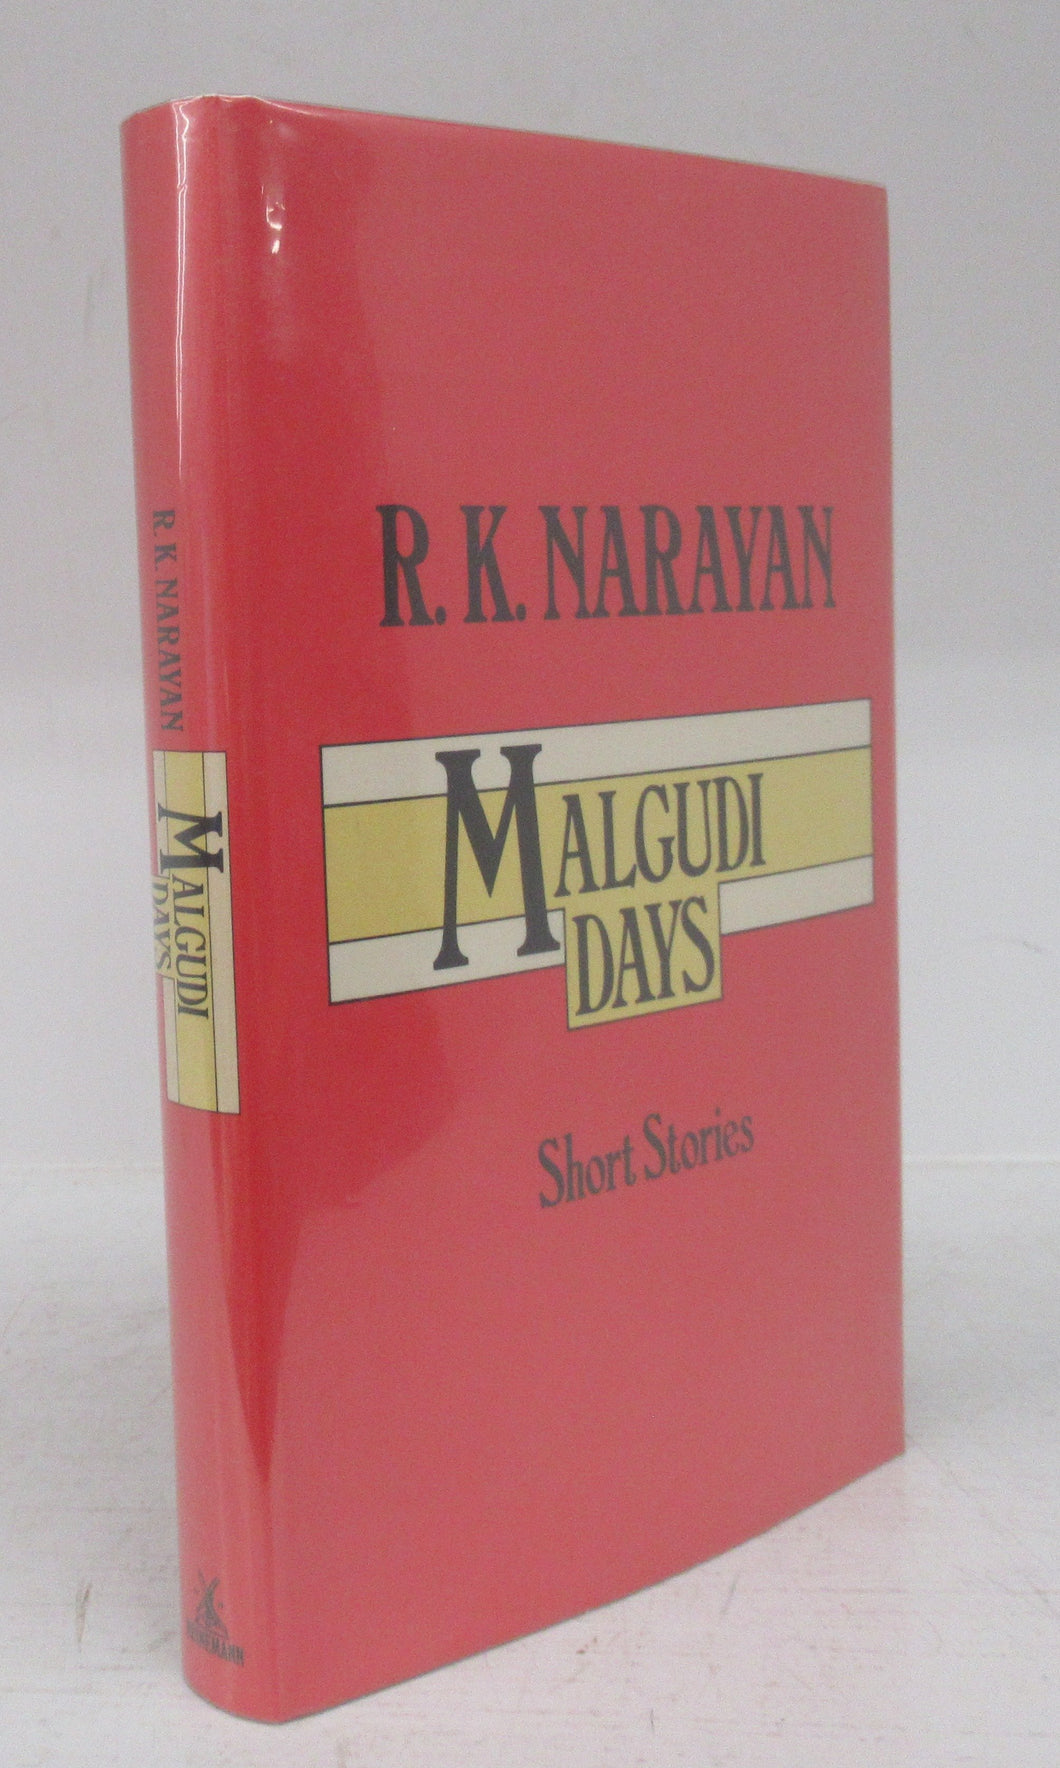 Malgudi Days: Short stories